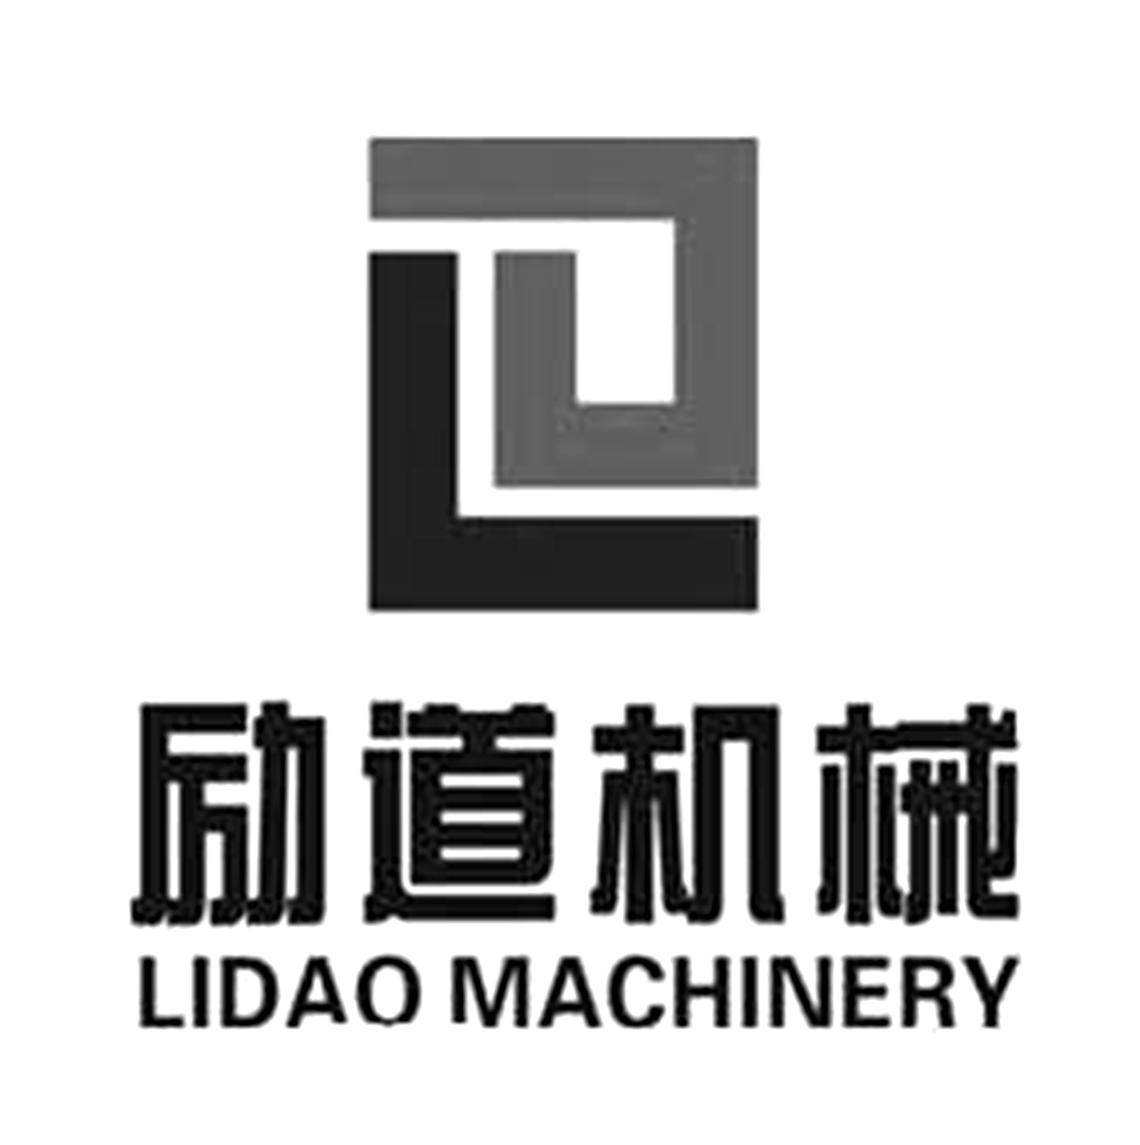 励道机械 LIDAO MACHINERY LD 商标公告